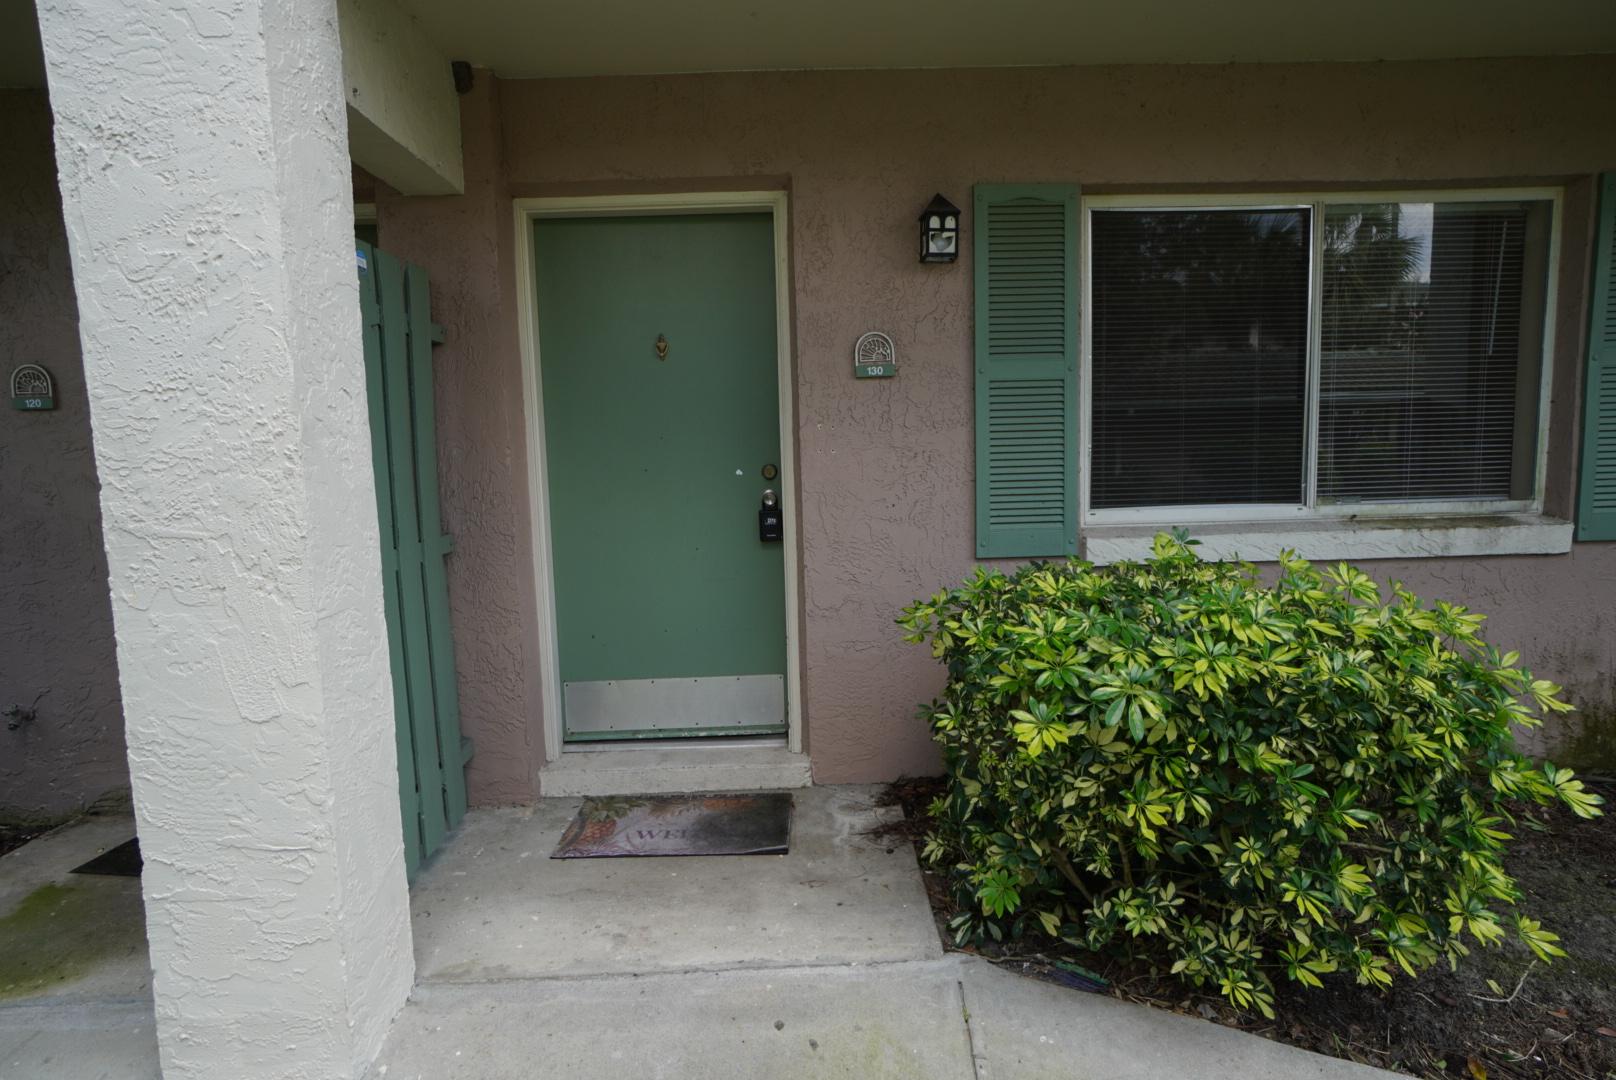 Photo of property: 129 Blue Pointe Way APT 130, Altamonte Springs, FL 32701